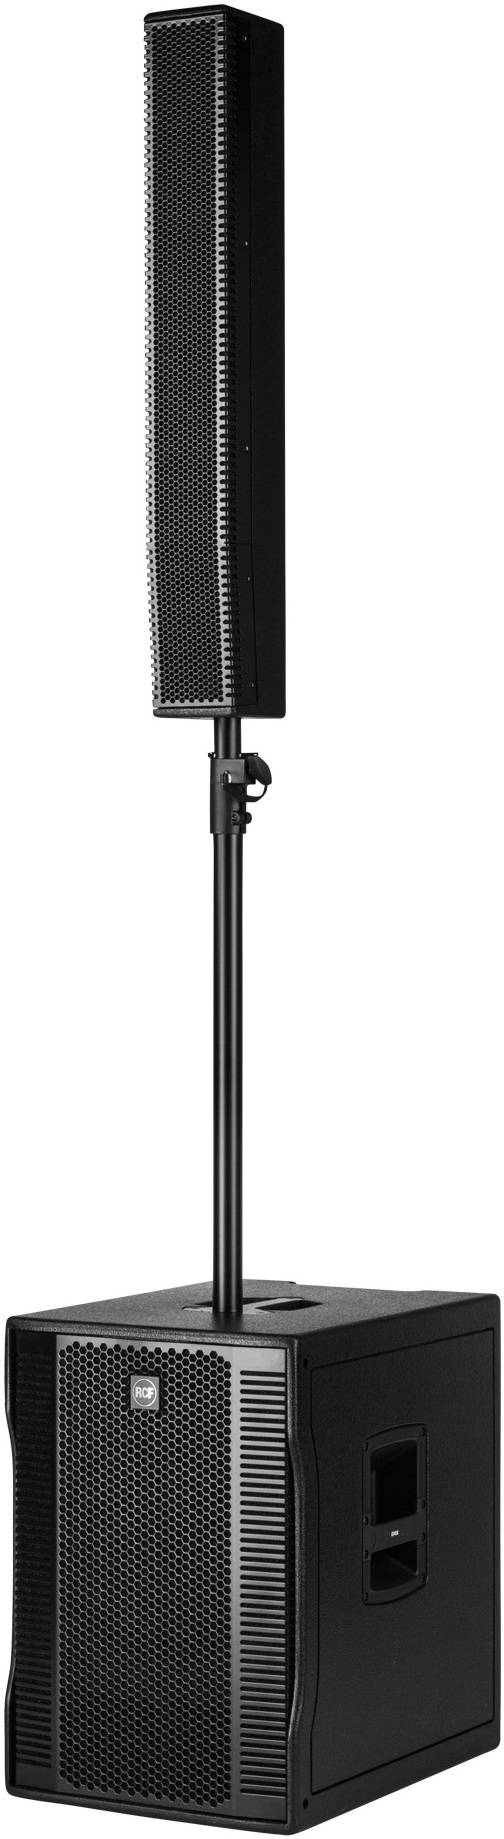 Rcf Evox 12 - Active full-range speaker - Main picture